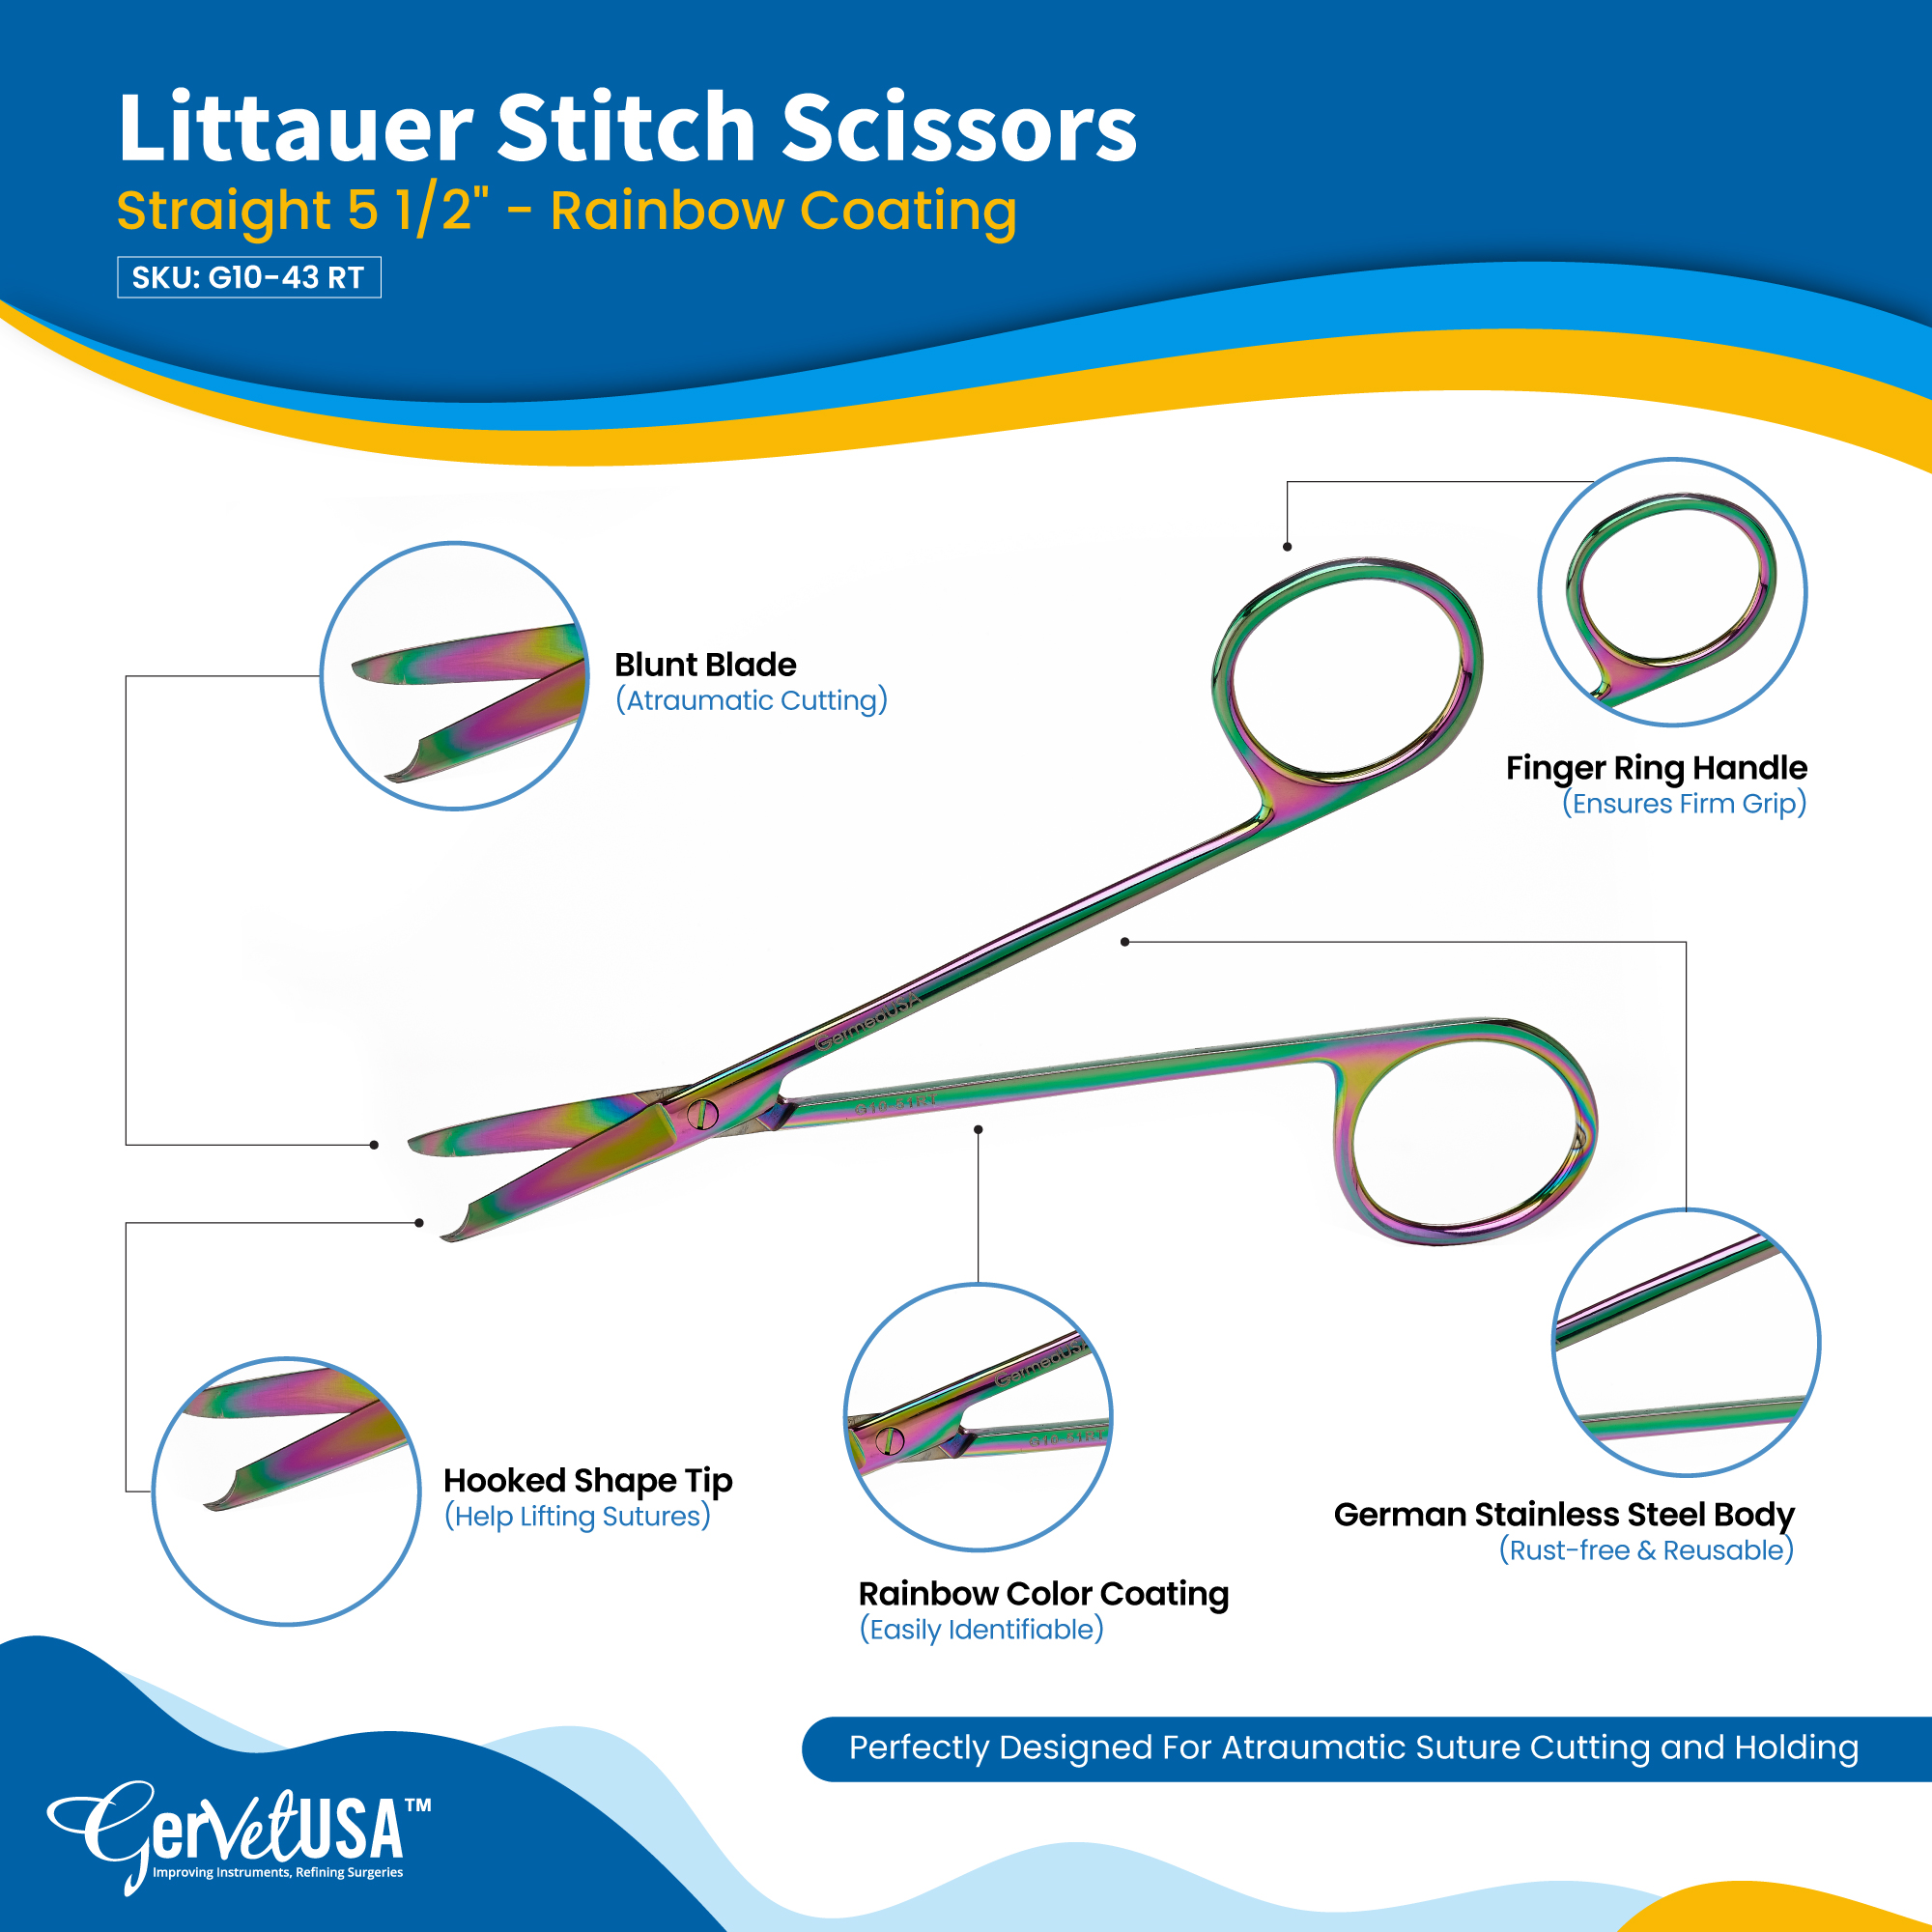 Littauer Stitch Scissors 5 1/2" Straight Rainbow Coated